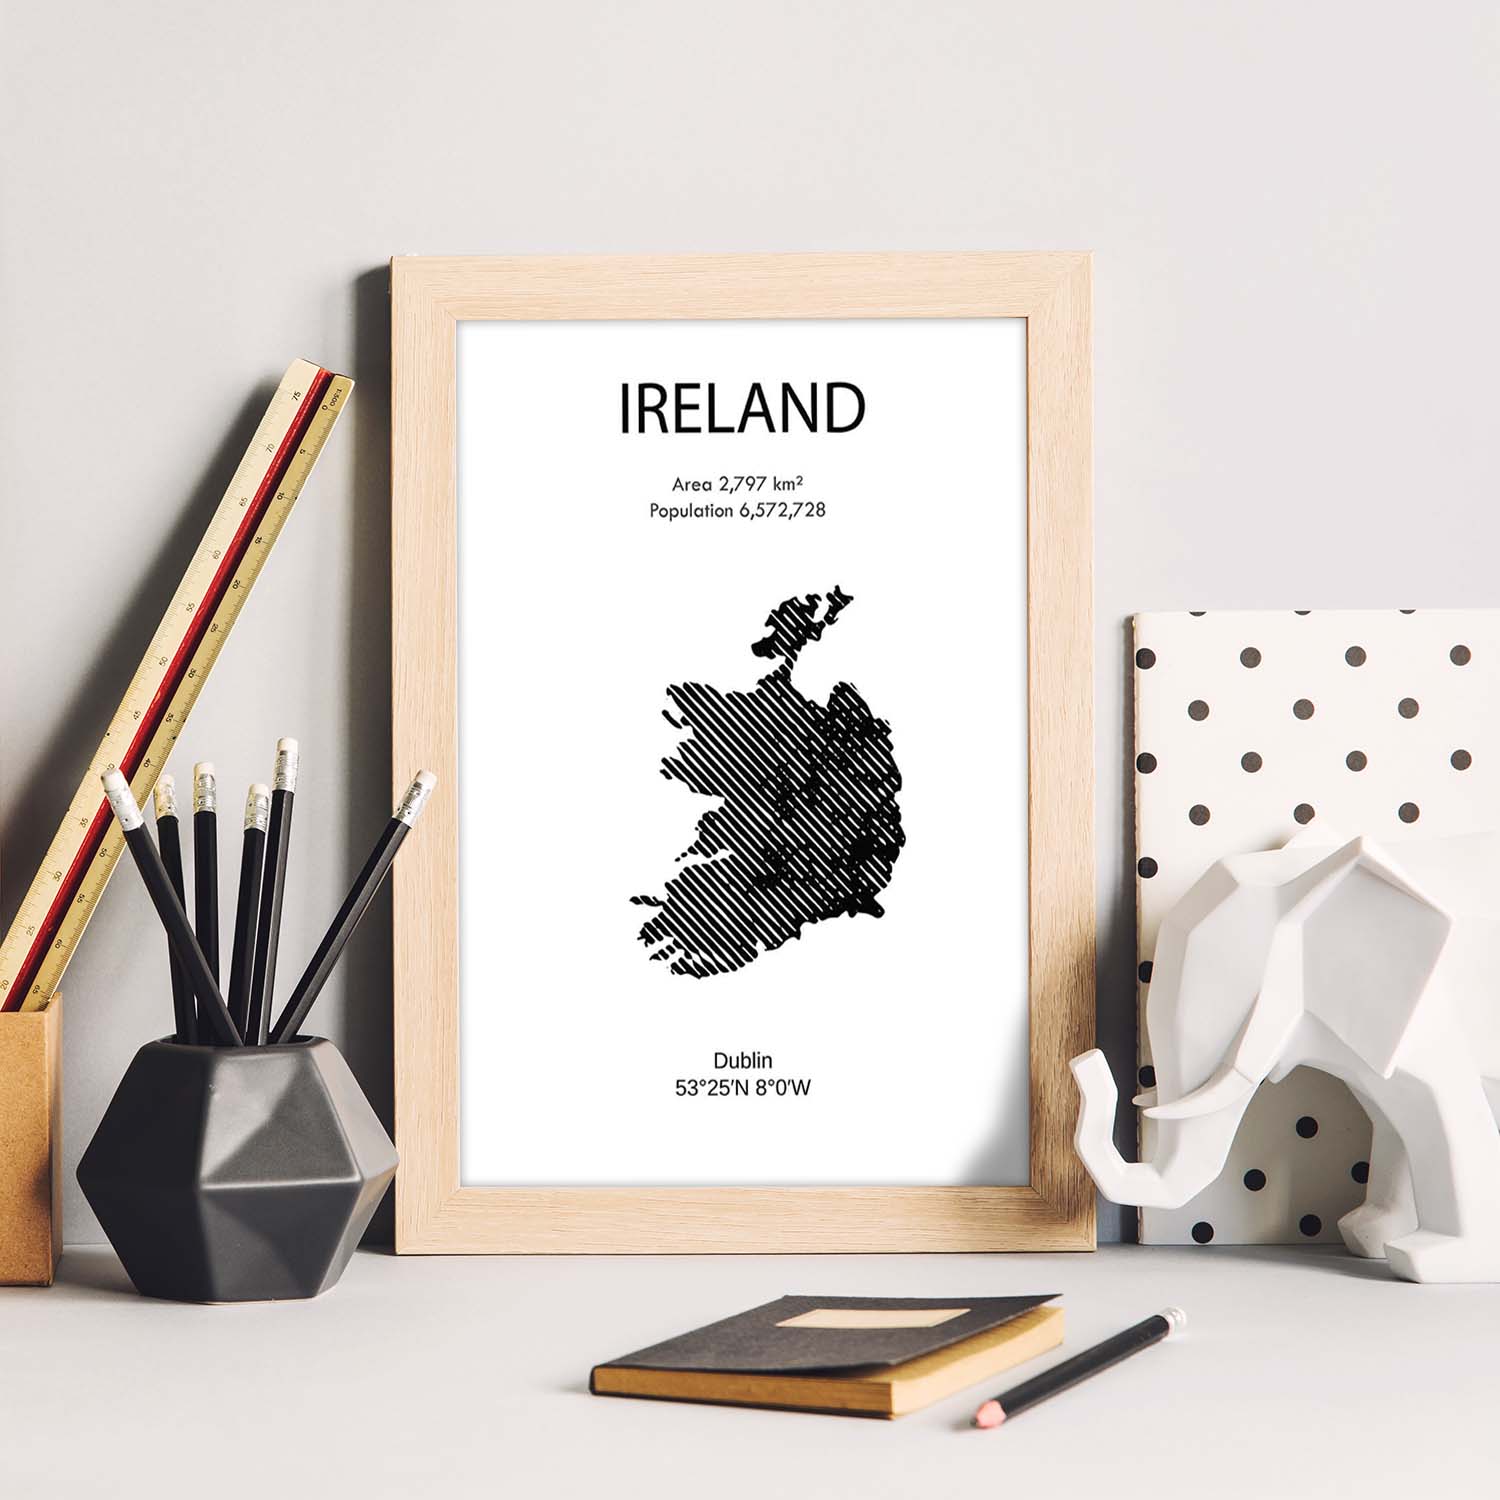 Poster de Irlanda. Láminas de paises y continentes del mundo.-Artwork-Nacnic-Nacnic Estudio SL